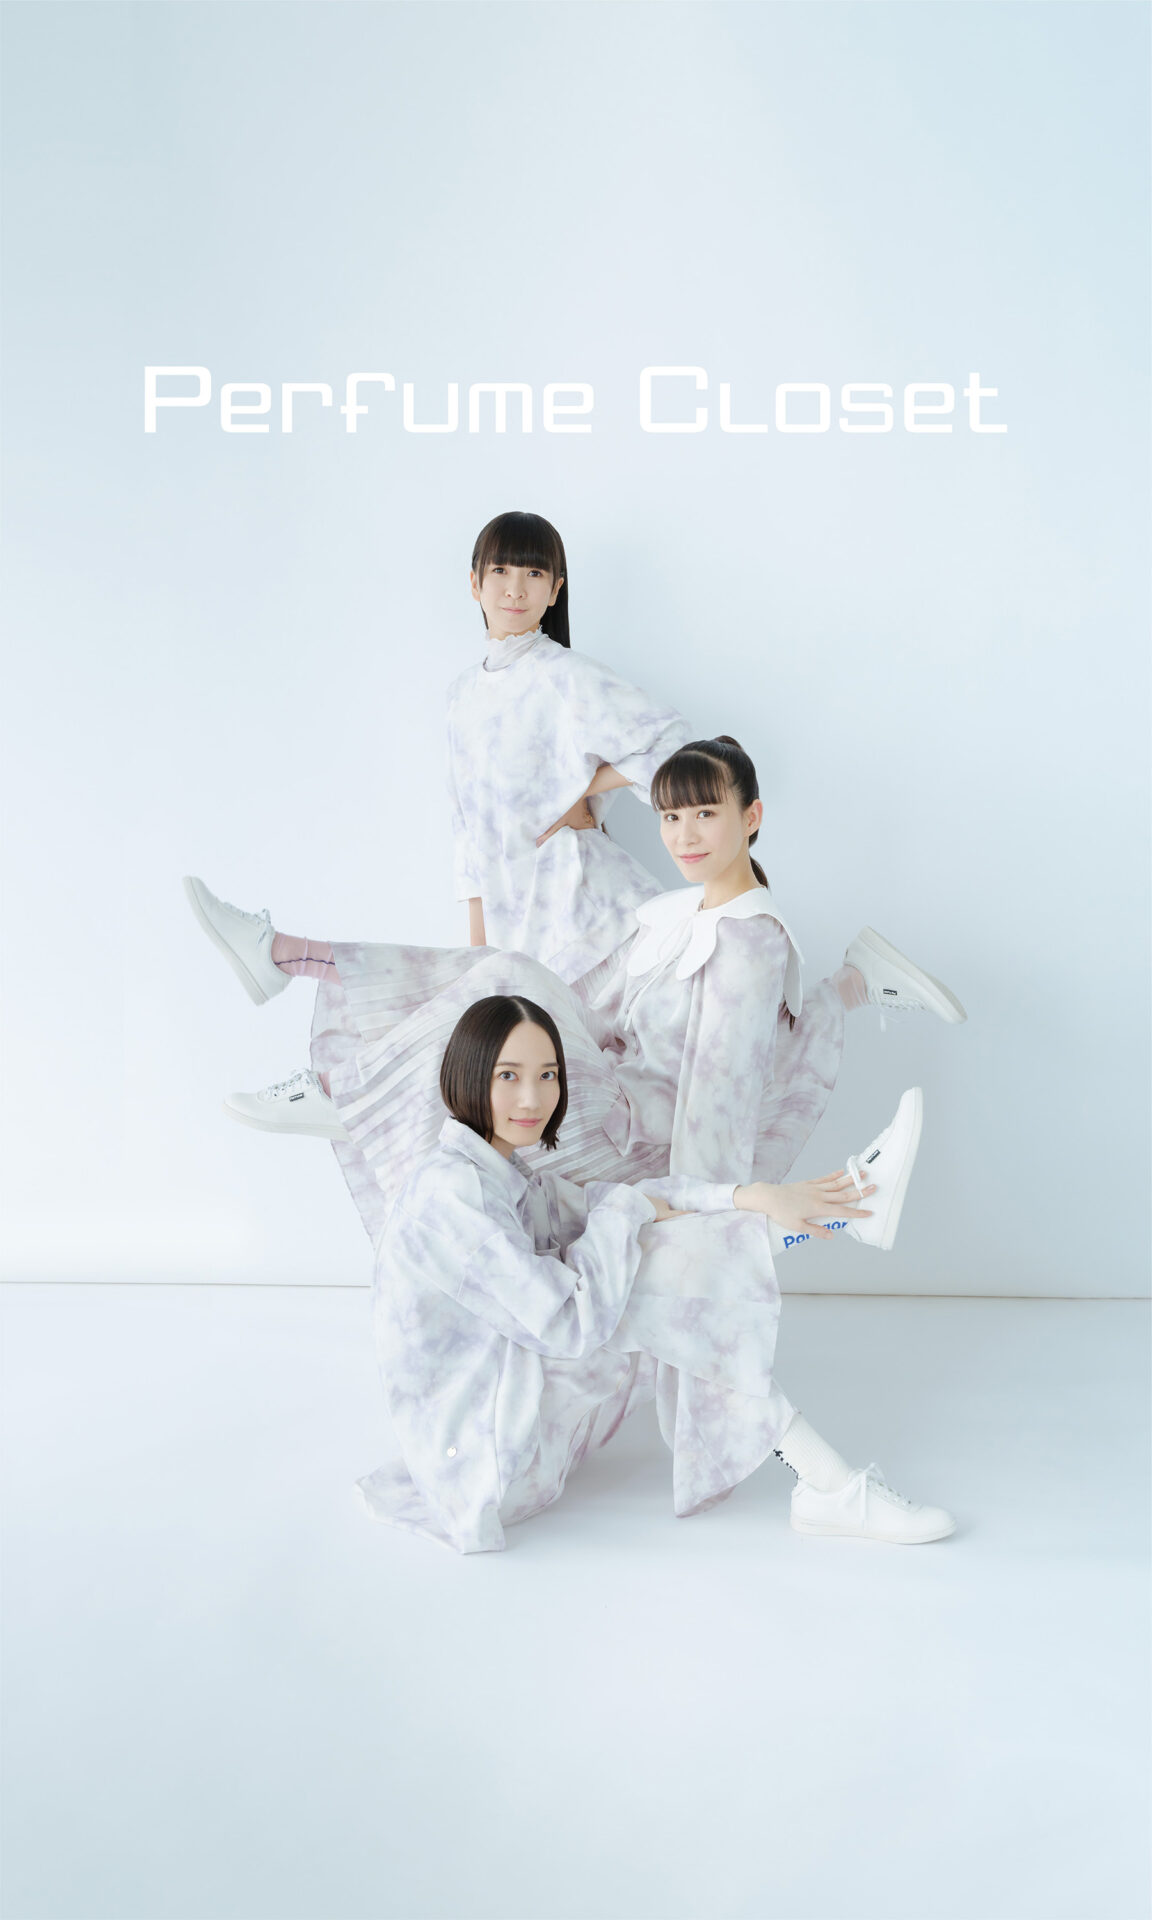 「Perfume Closet」NEW ITEMのスニーカー 10/7(金)販売スタート！Perfume 9th Tour 2022 “PLASMA” 宮城・埼玉・北海道のライブ会場でも販売実施決定！￼